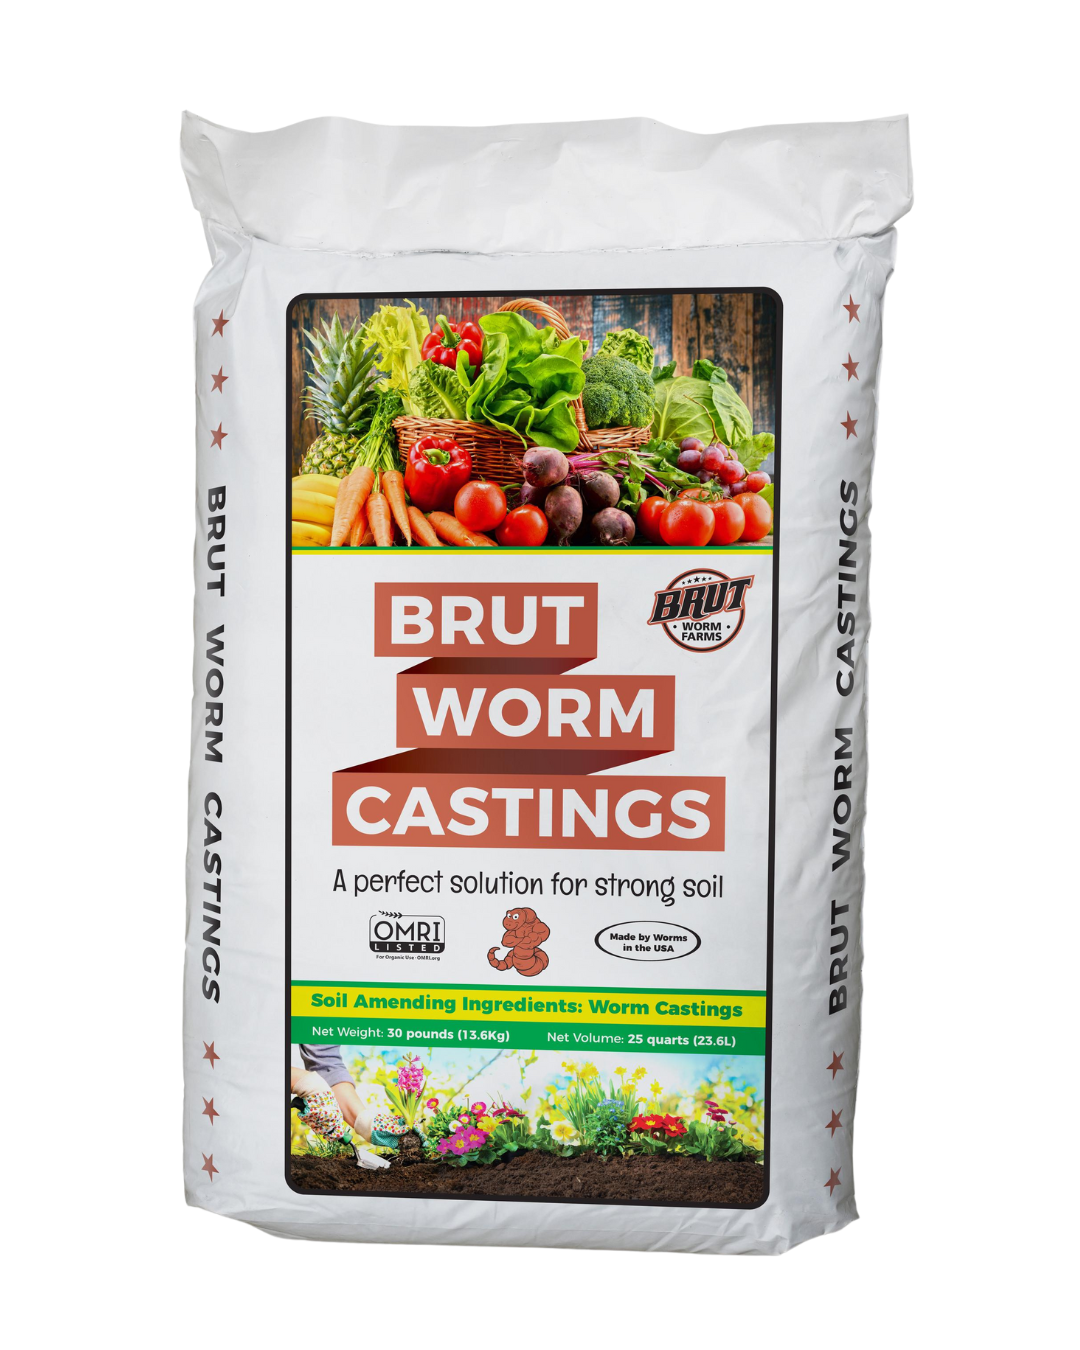 Brut Worm Castings best organic fertilizer